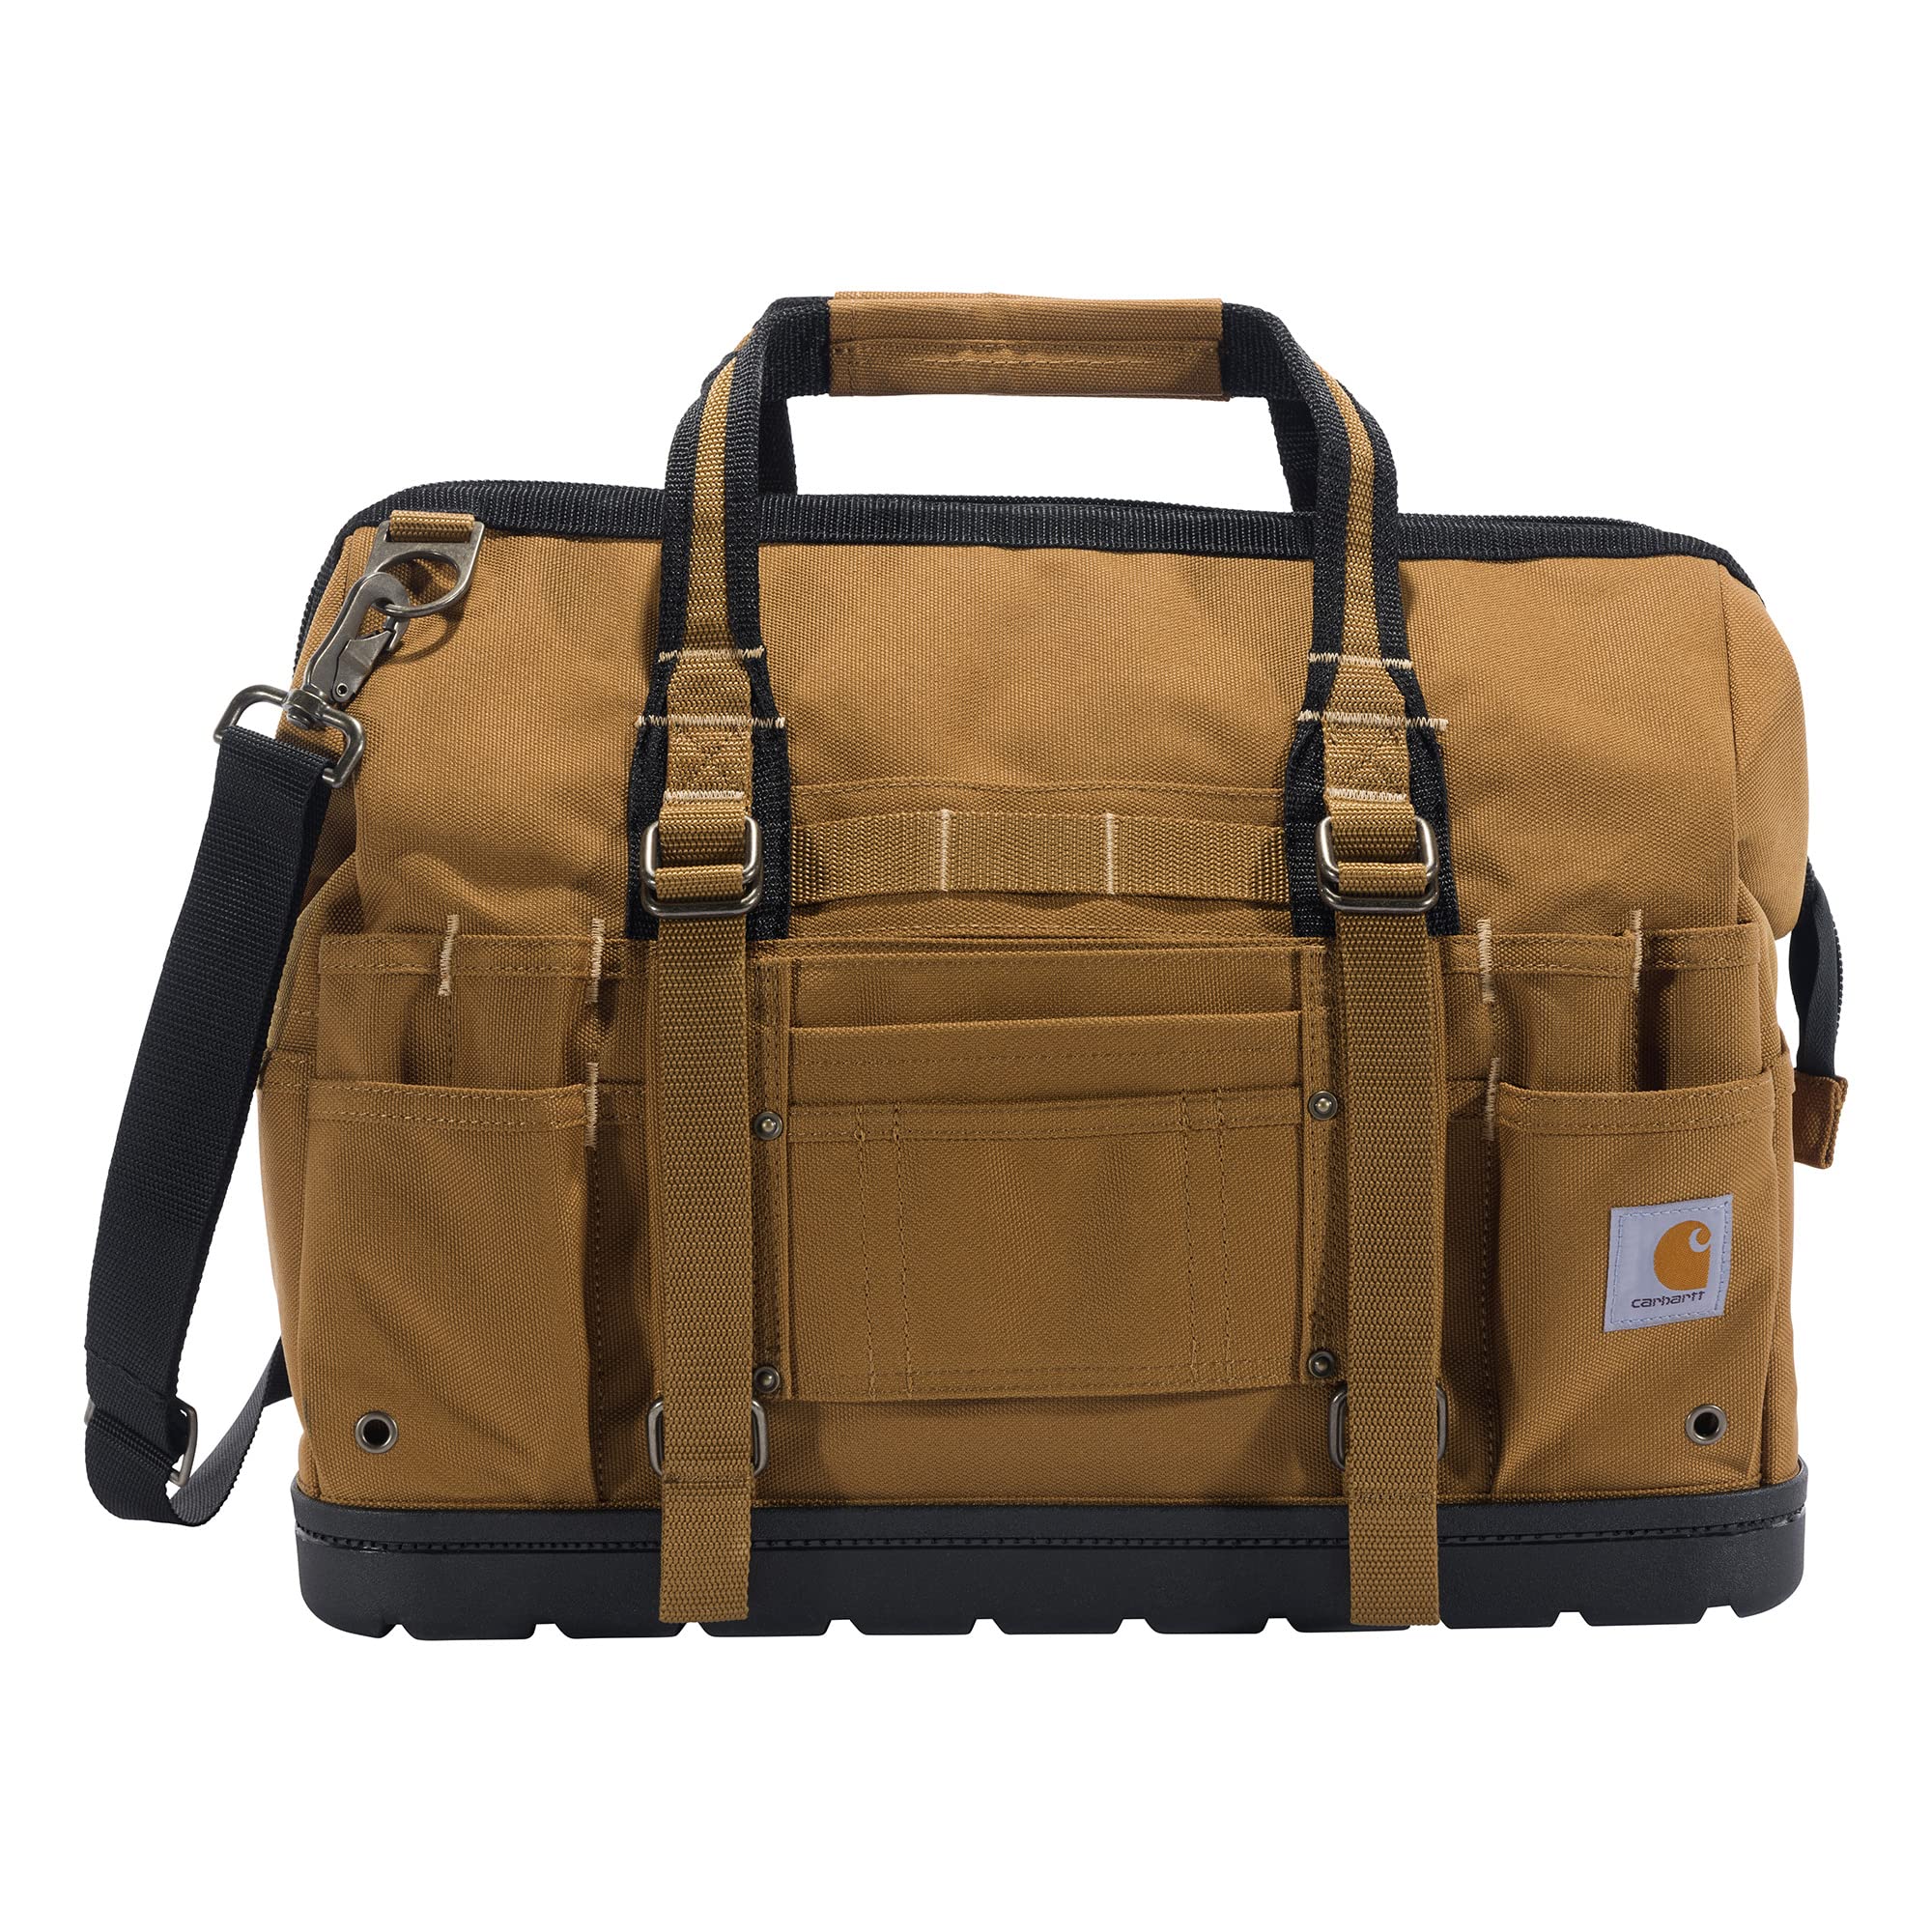 Backpack with Wheels | RYOBI RSSBP2